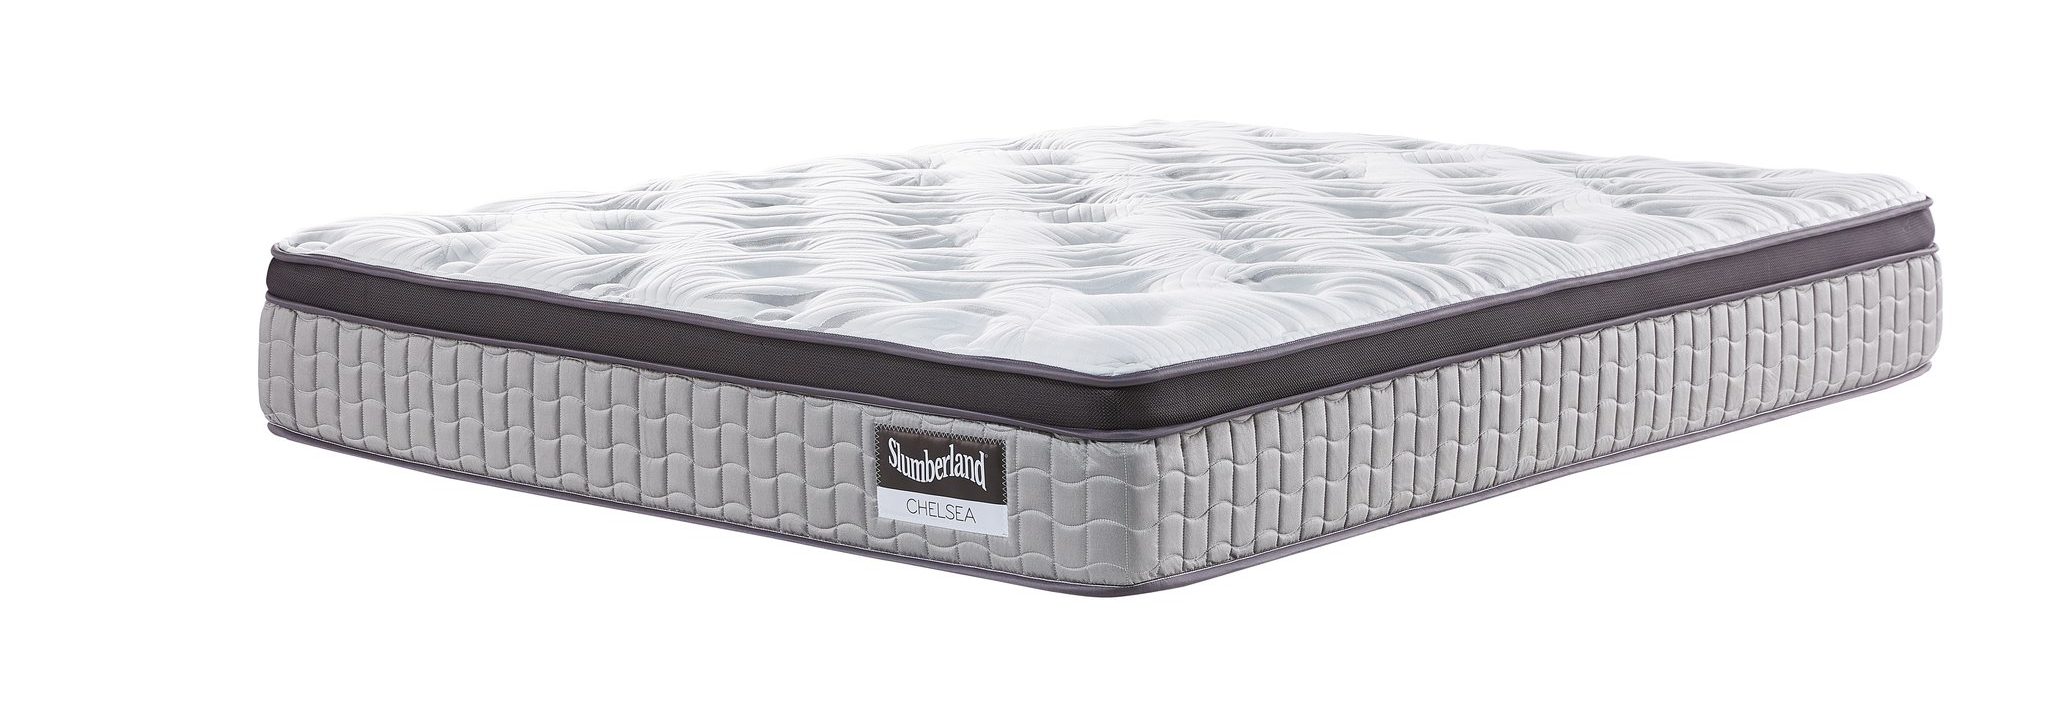 slumberland chelsea mattress plush review